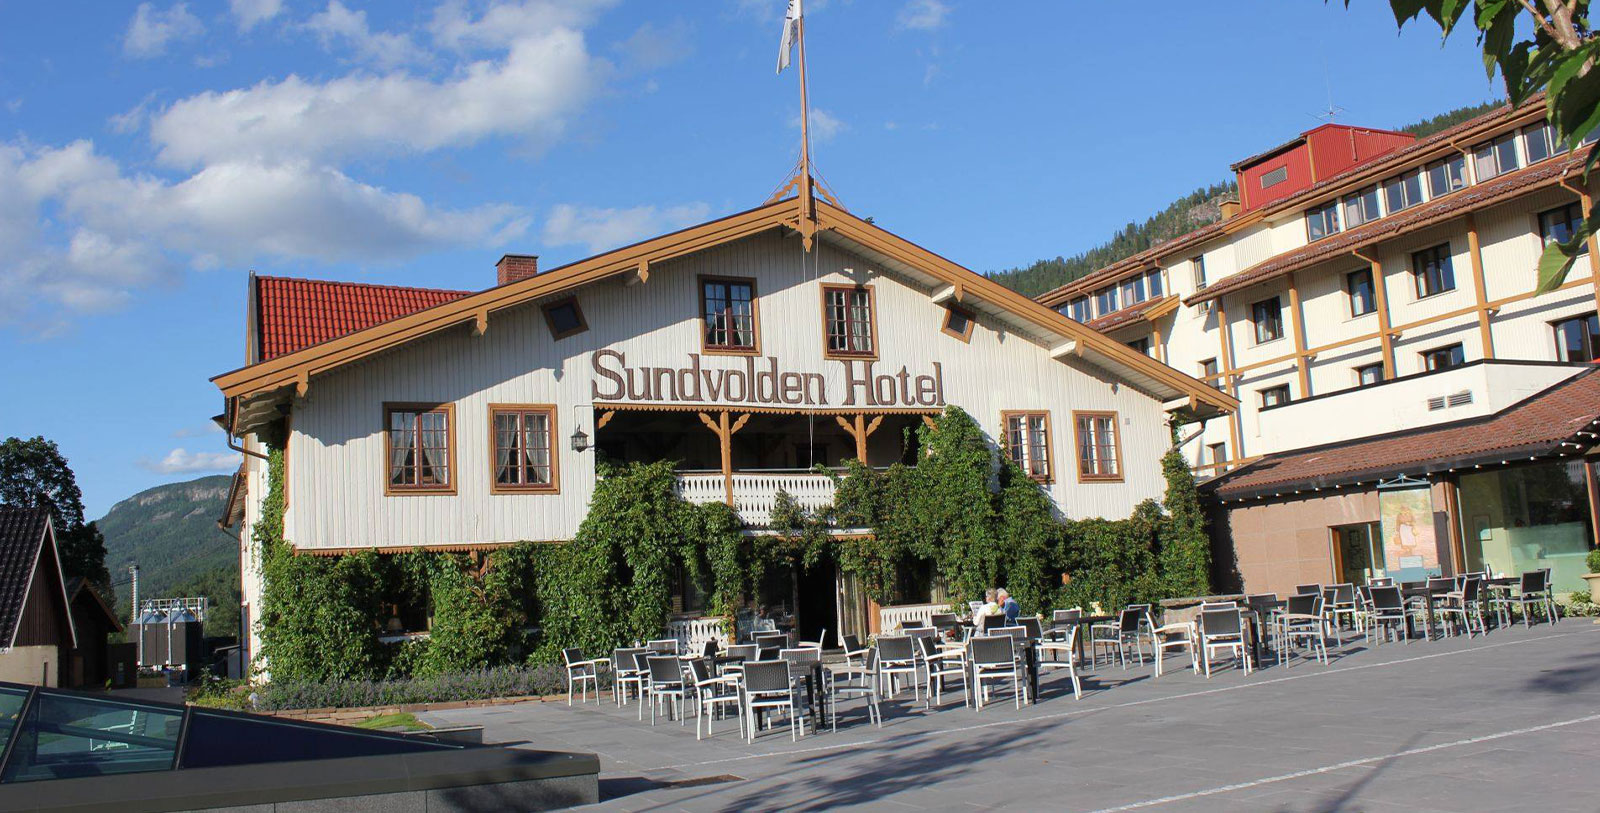 Image of Hotel Exterior Sundvolden Hotel, 1648, Member of Historic Hotels Worldwide, in Krokkleiva, Norway, Overview